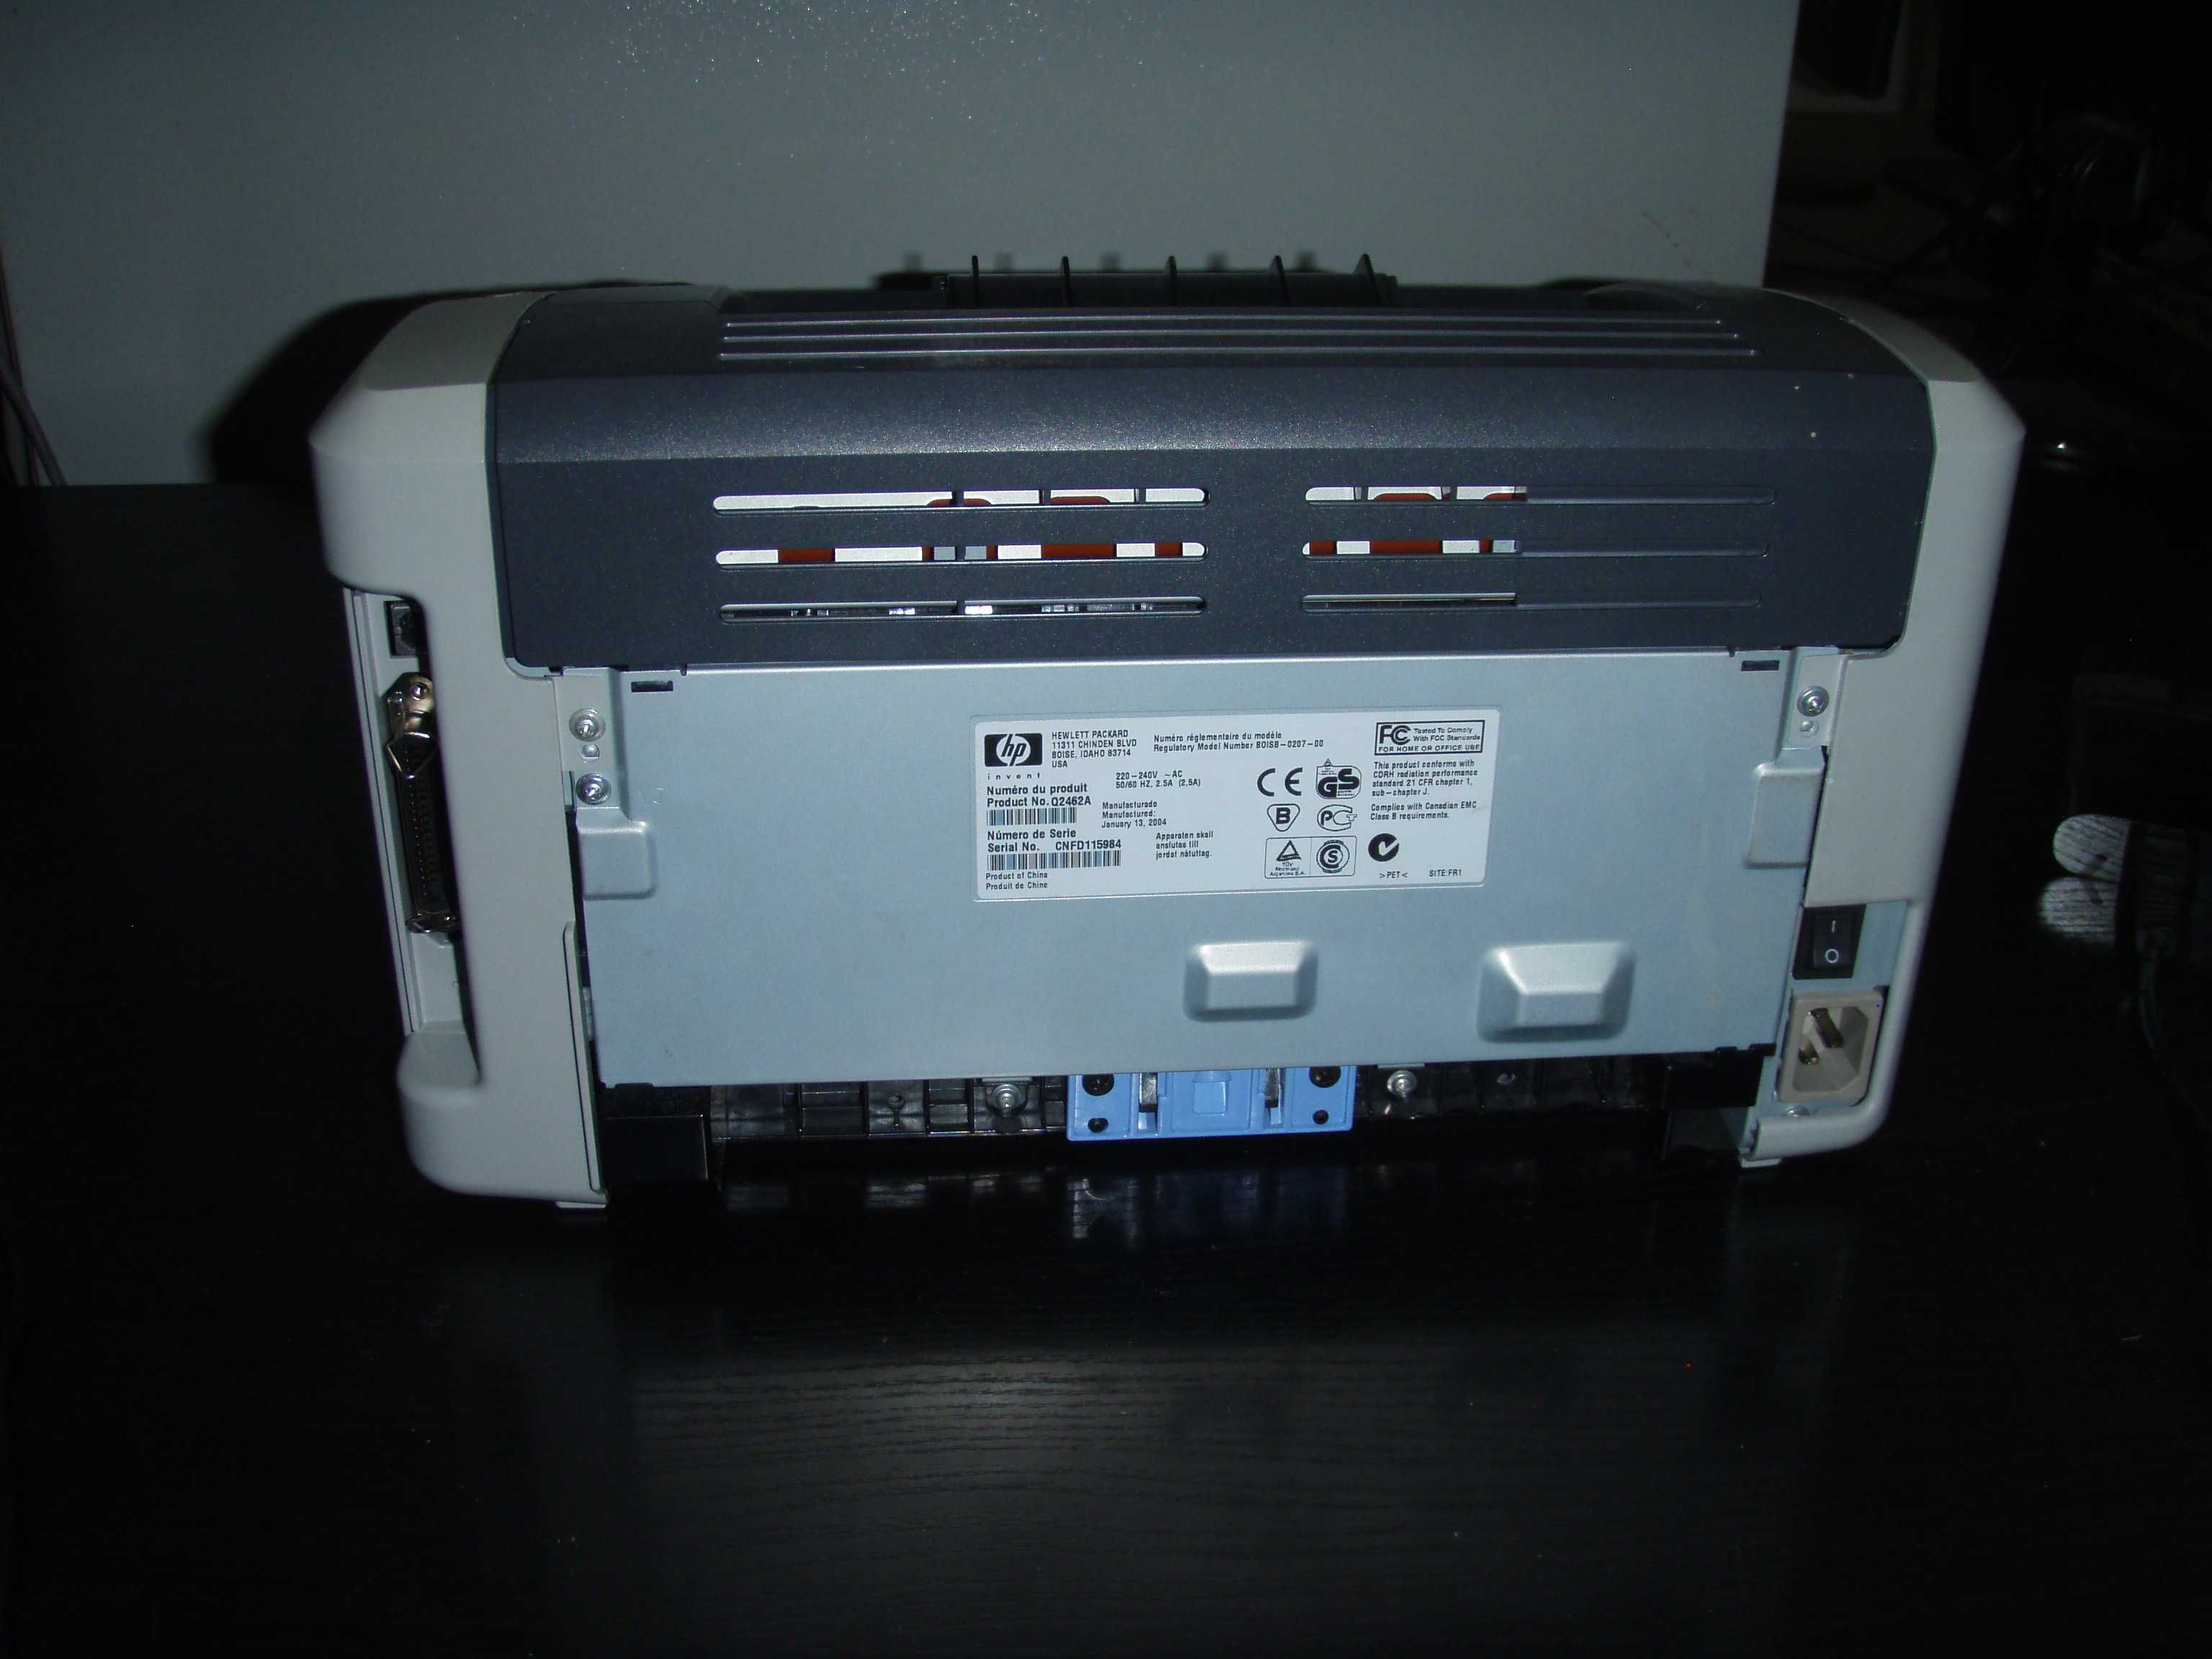 Imprimanta laser monocrom HP LaserJet 1015